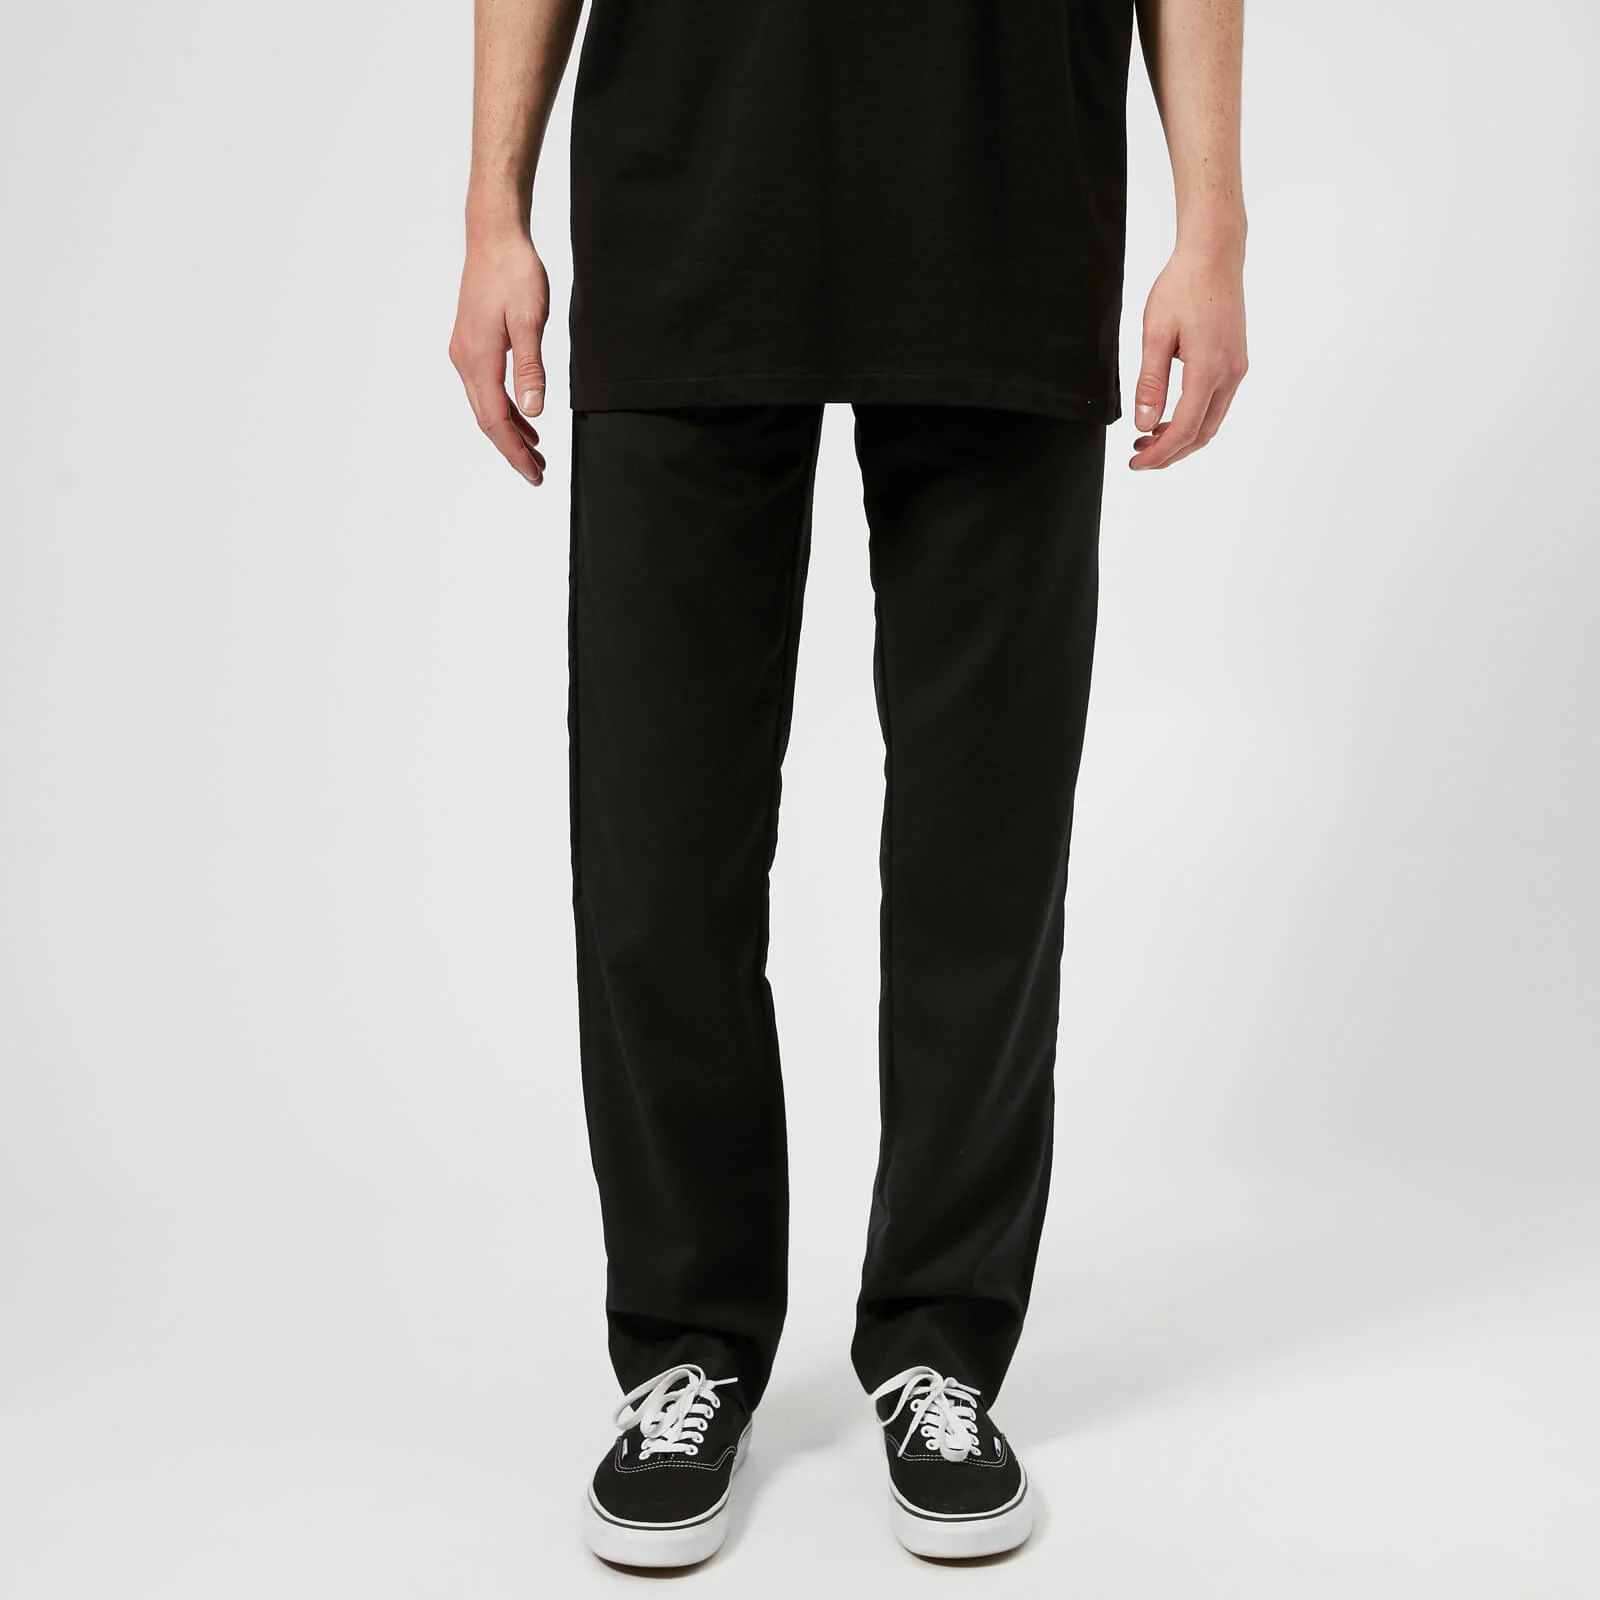 Matthew Miller Men's Leto Tailored Trousers - Black Image 1